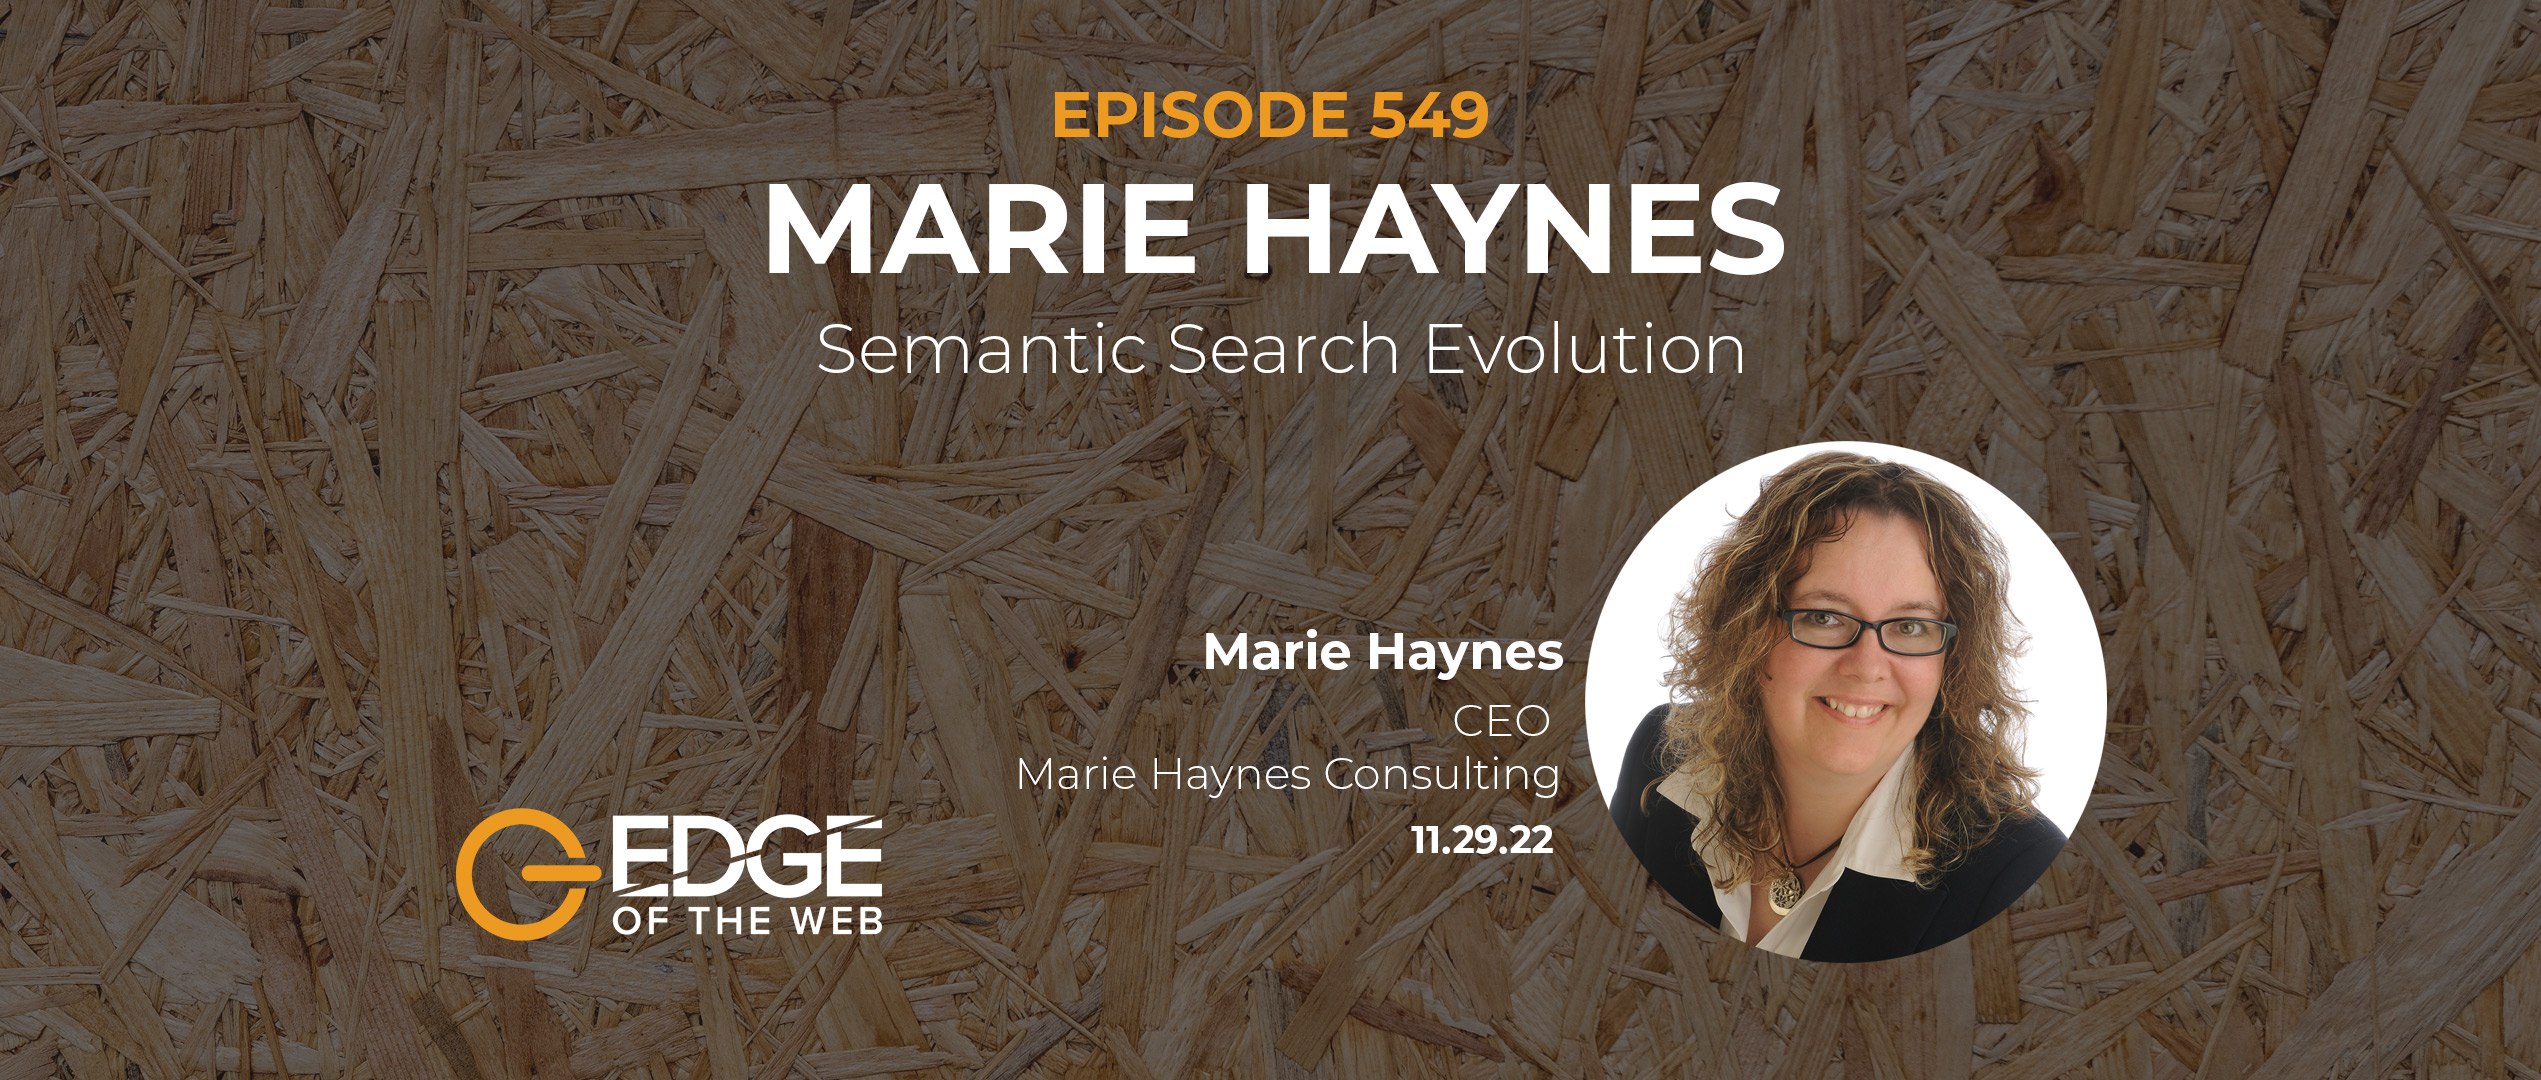 Marie Haynes EDGE Episode 549 Featured Image